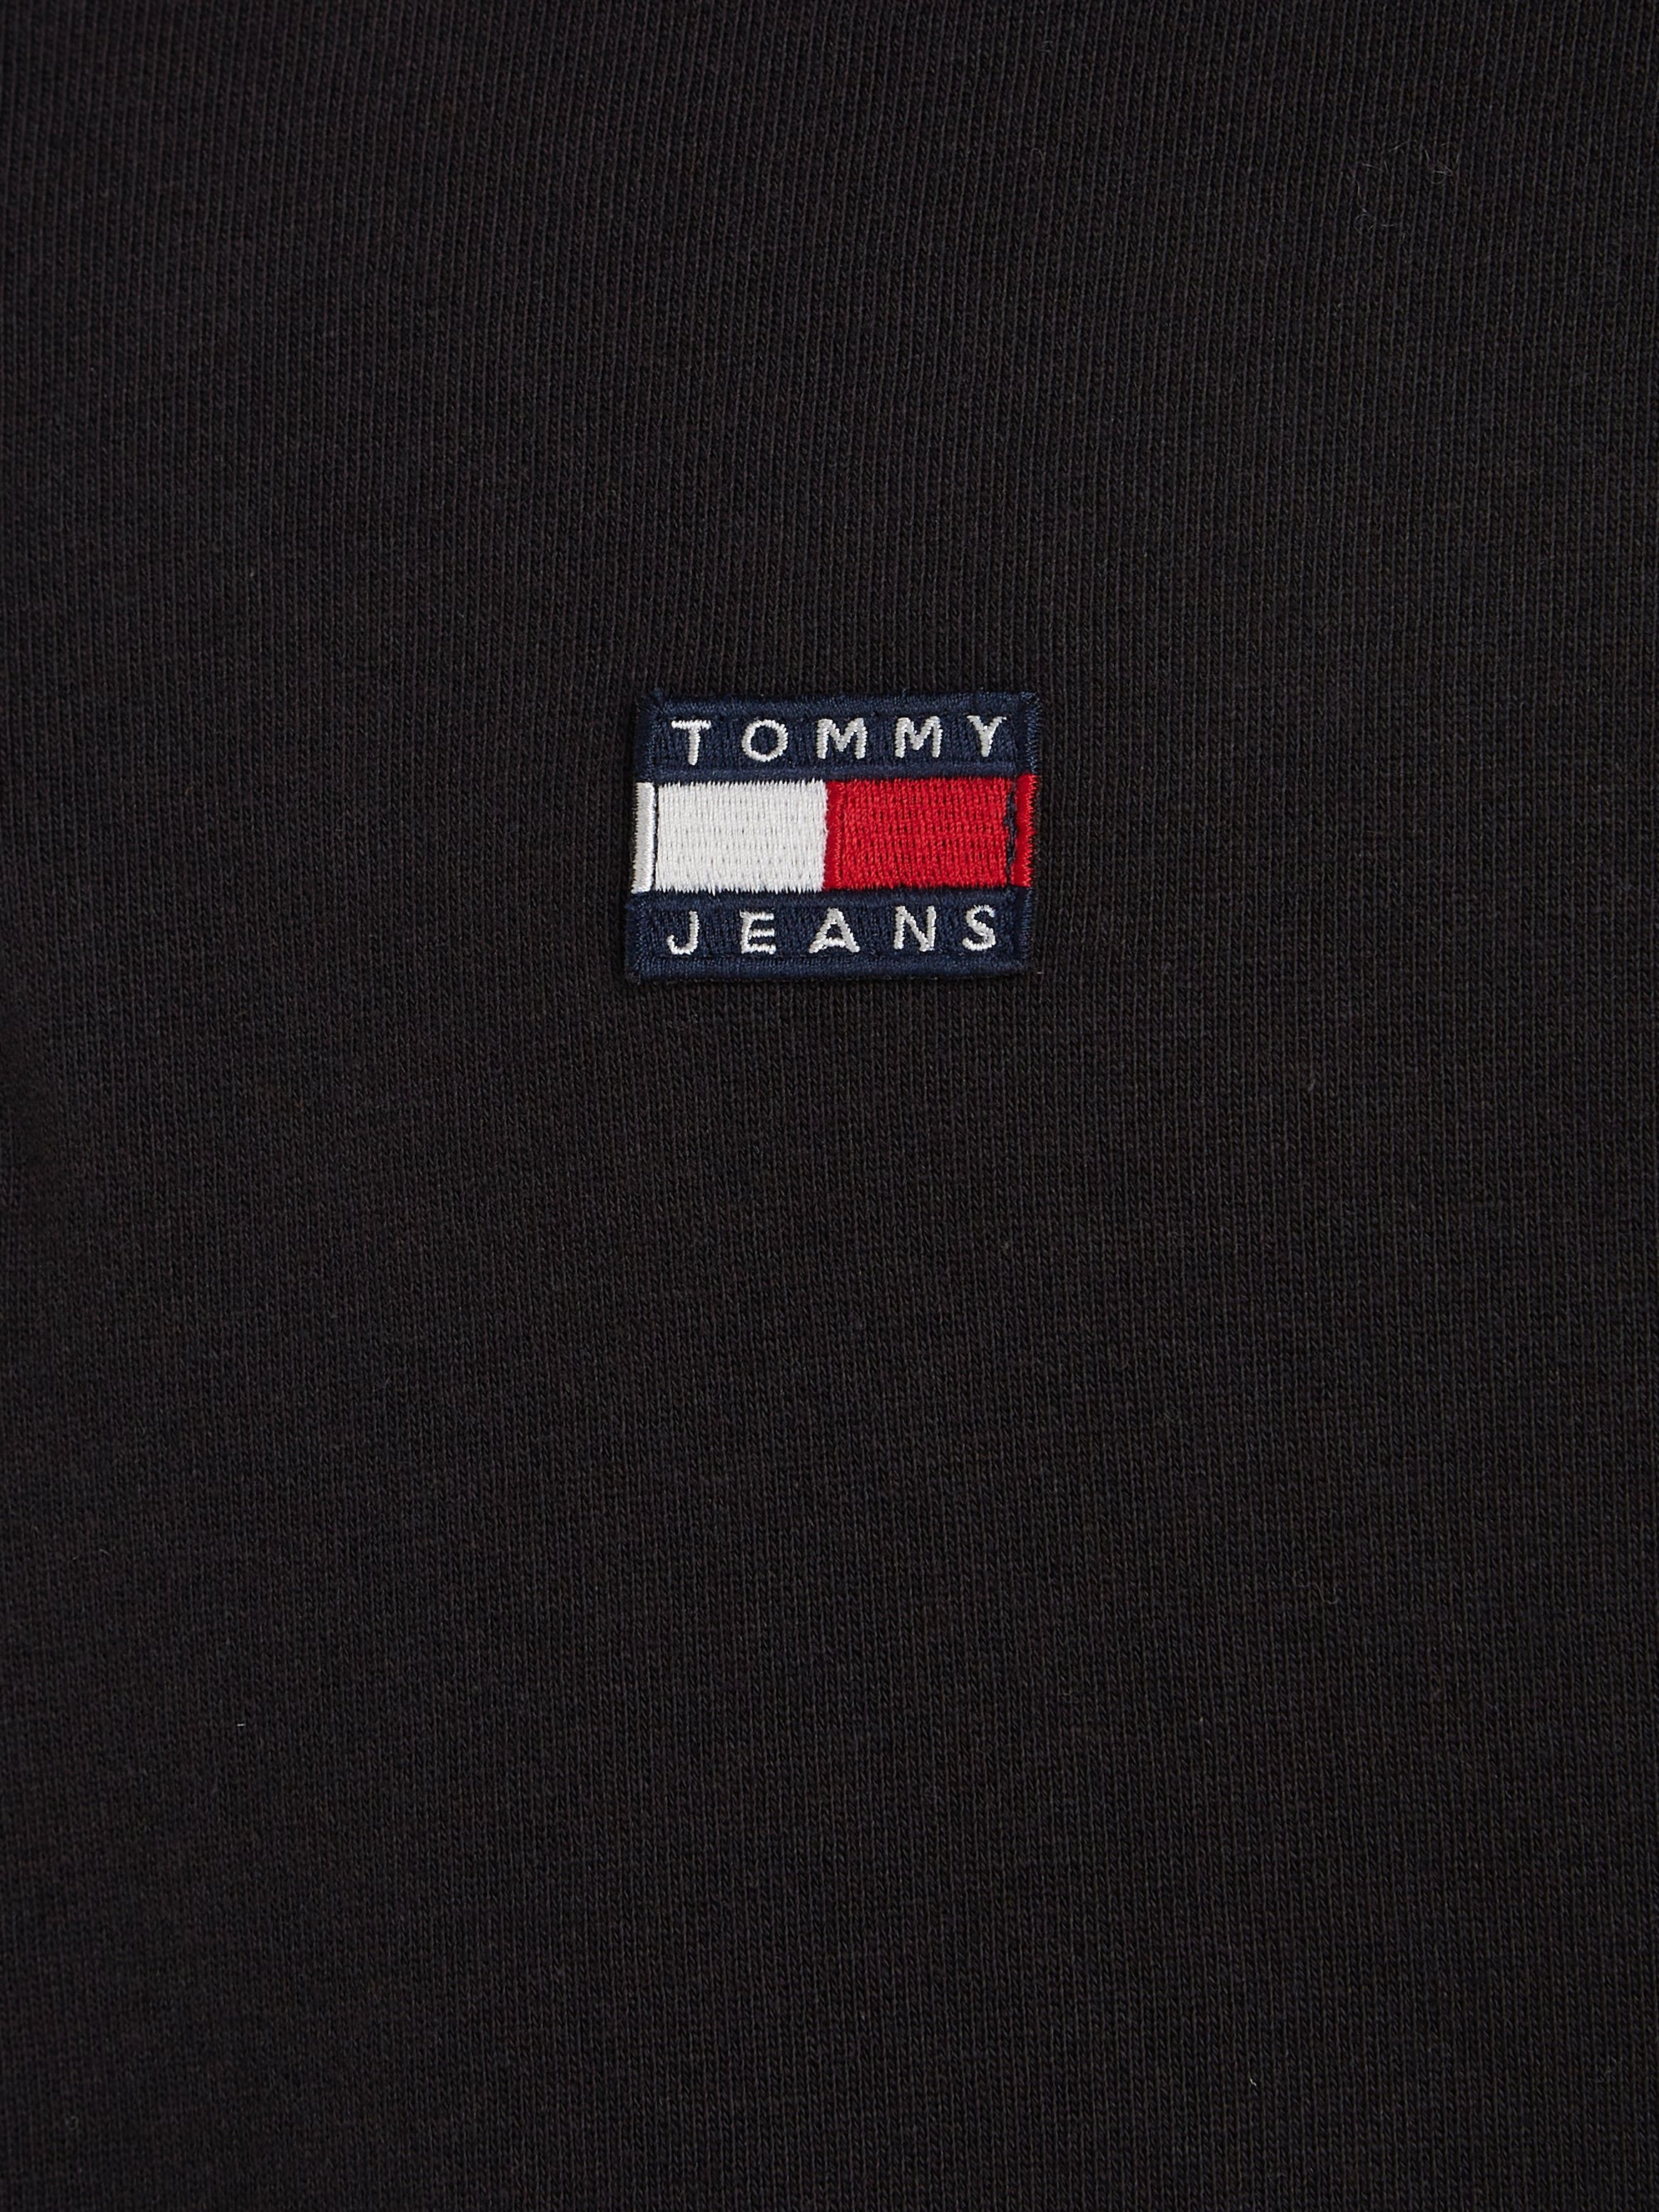 TJM Tommy Black BADGE Jeans Langarm-Poloshirt RUGBY